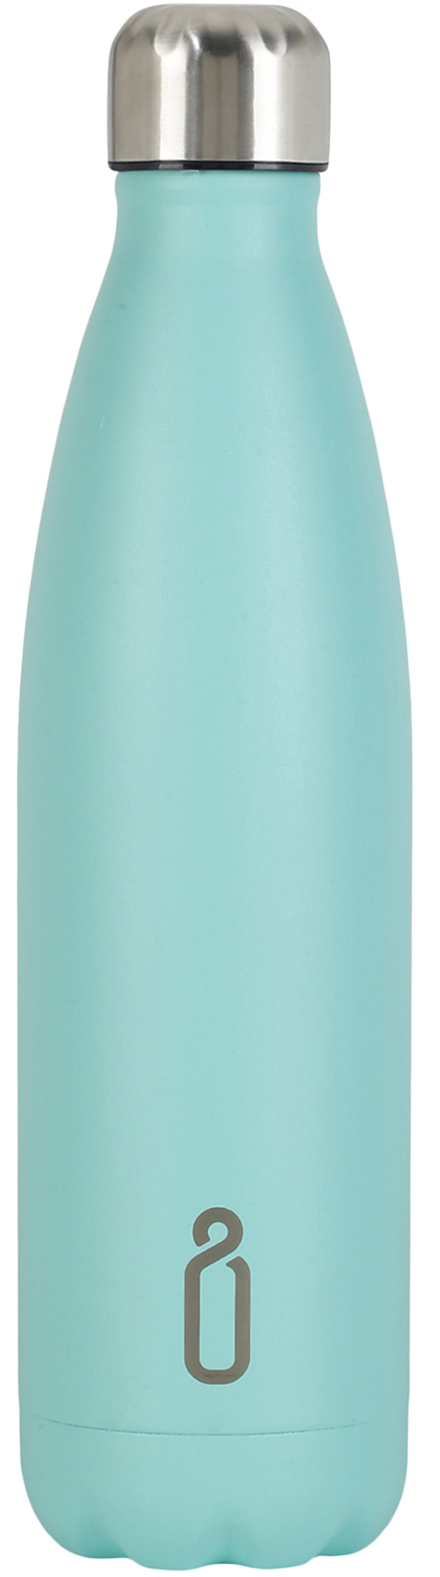 Pastel Green Reusable Water Bottle 750ml